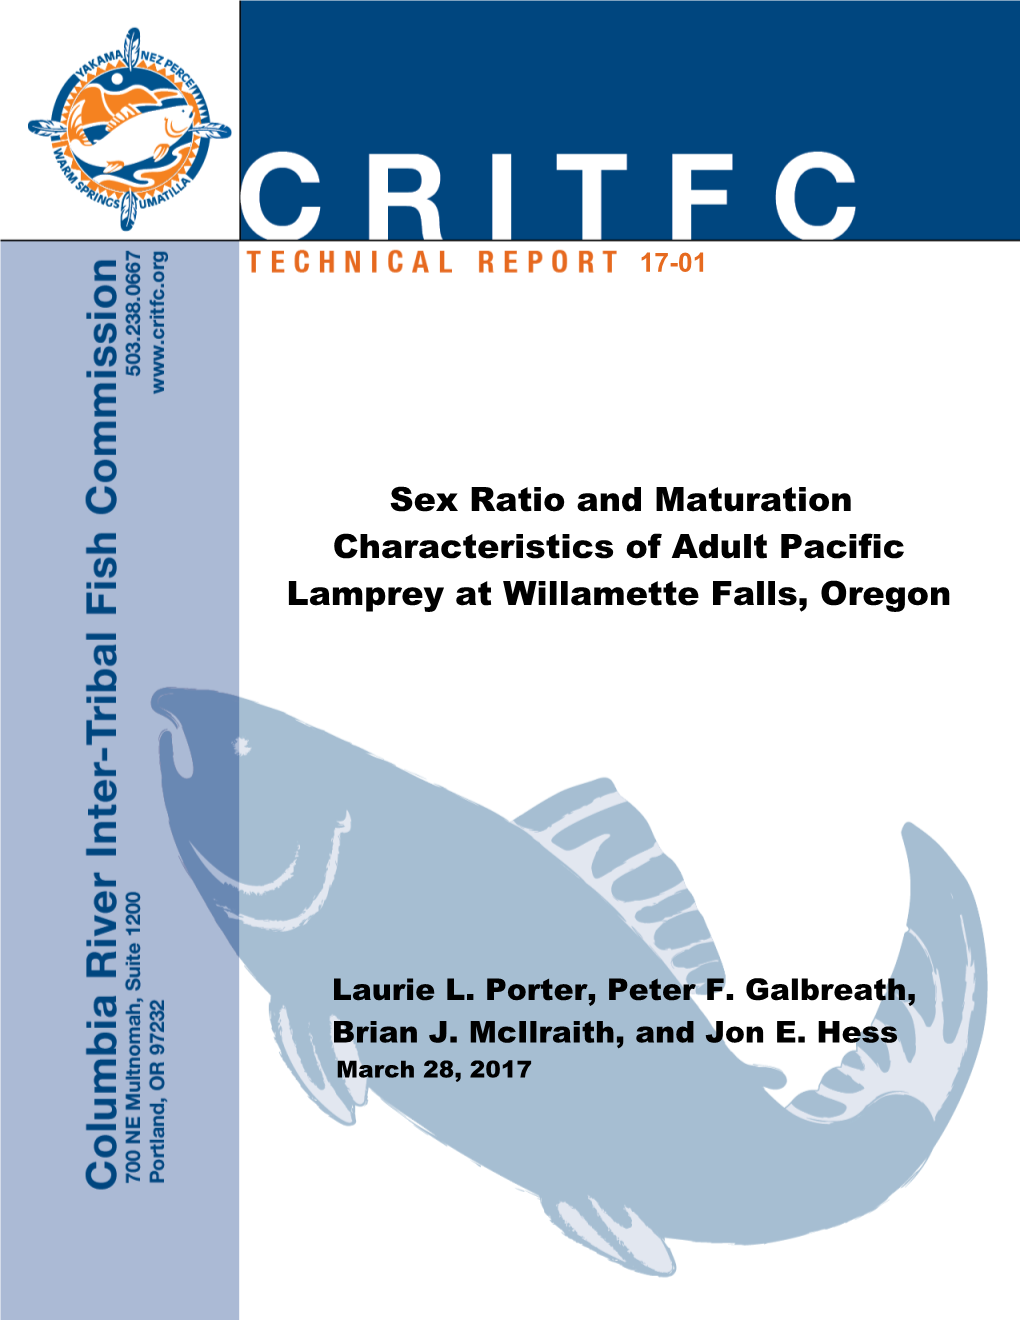 Sex Ratio and Maturation Characteristics of Adult Pacific Lamprey at Willamette Falls, Oregon